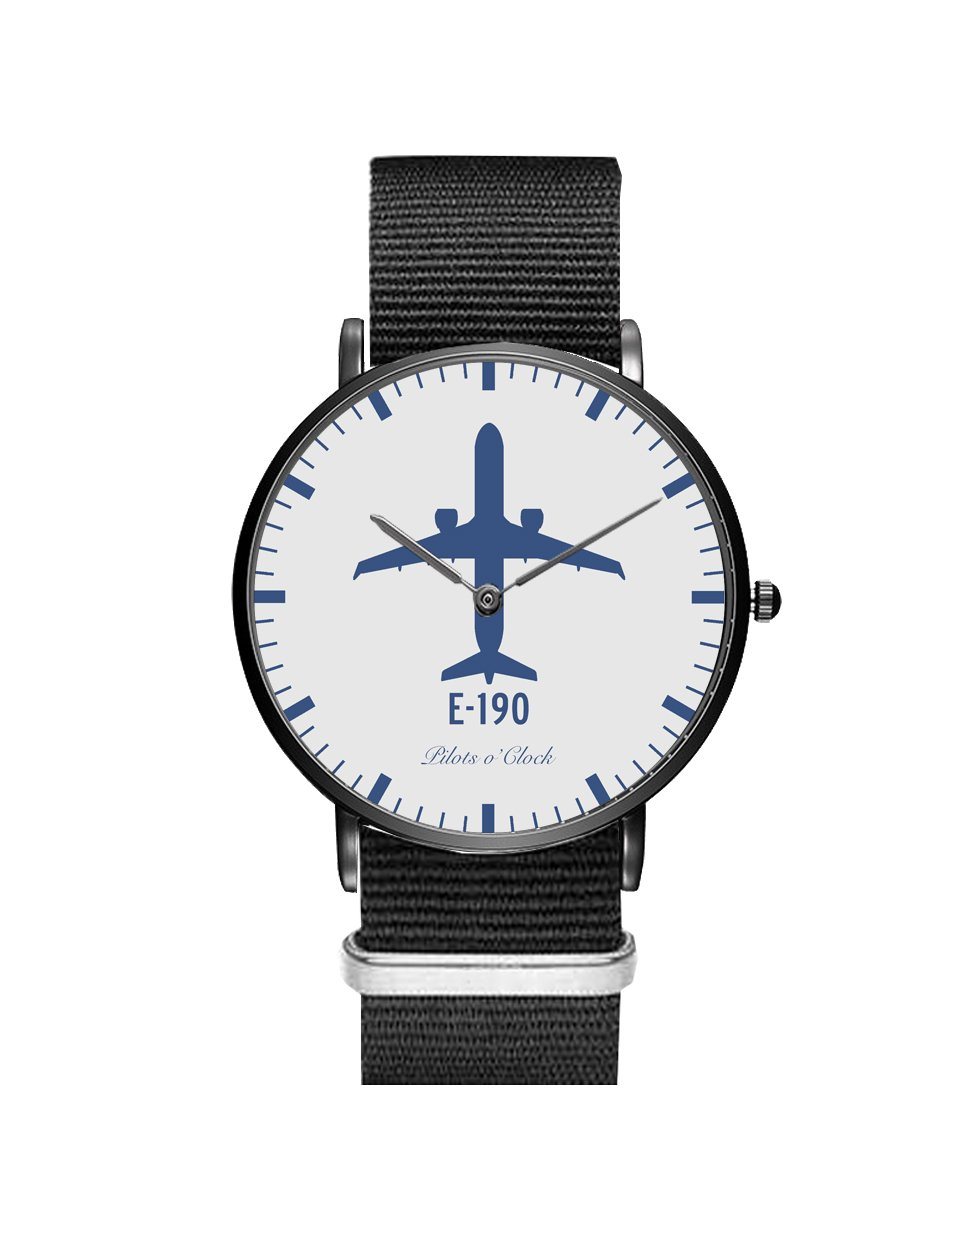 Embraer E190 Leather Strap Watches Pilot Eyes Store Black & Black Nylon Strap 